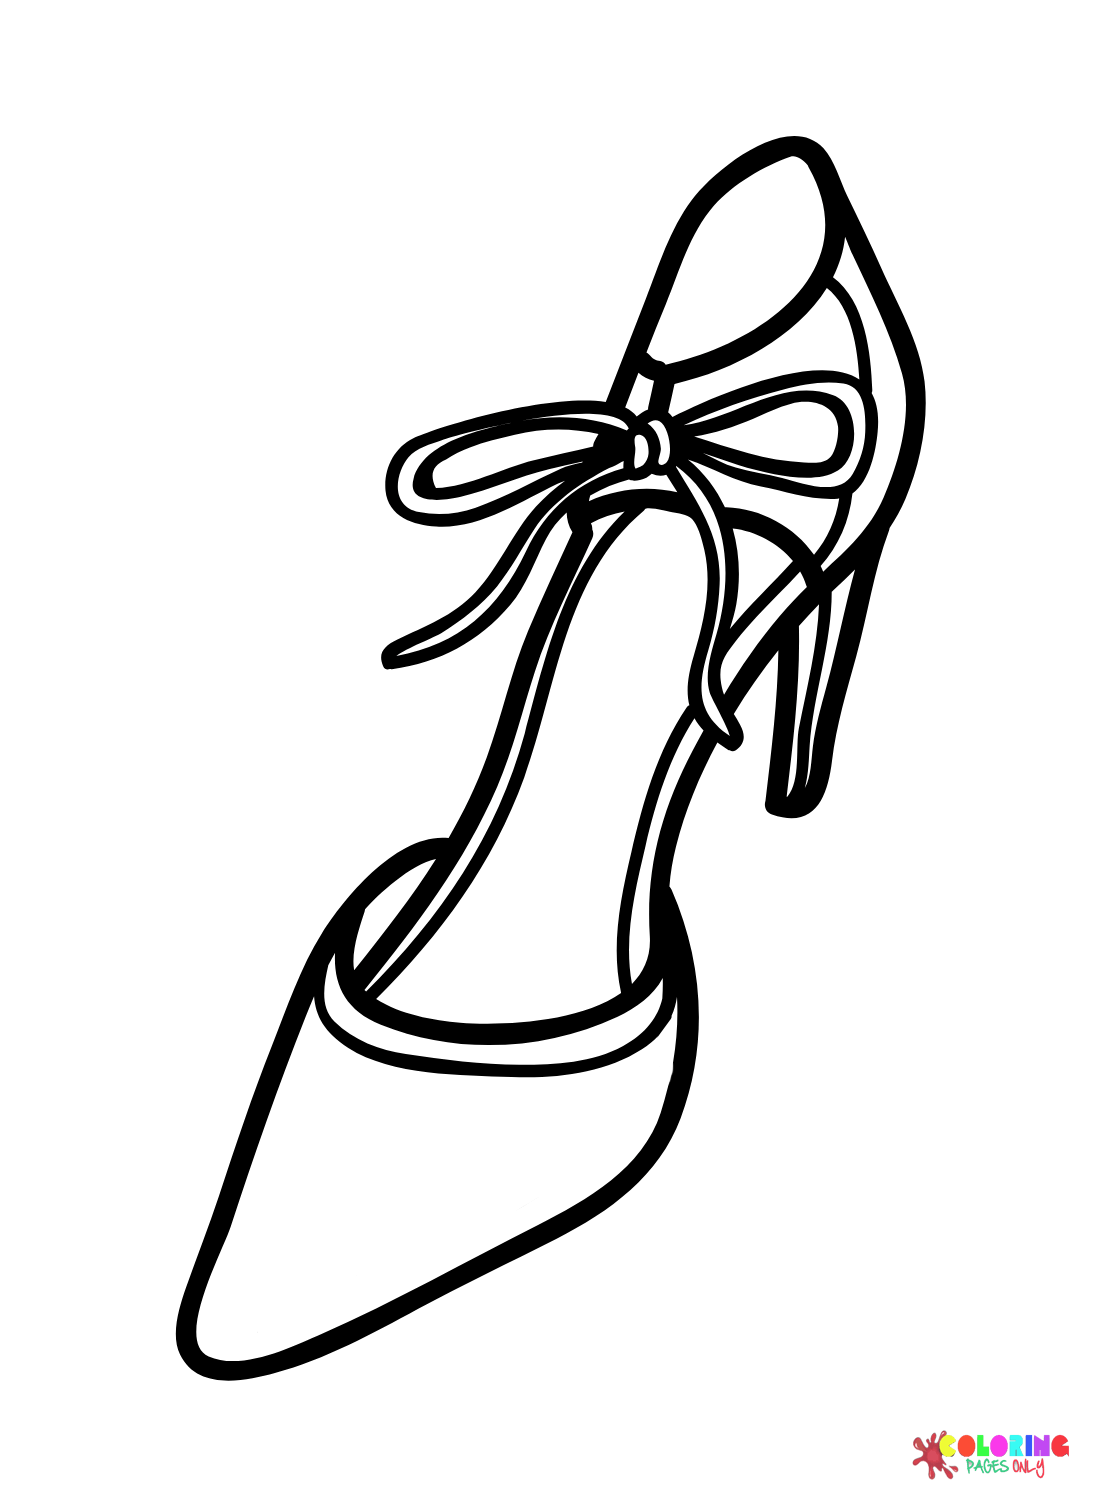 Lindo sapato de casamento da Wedding Shoes